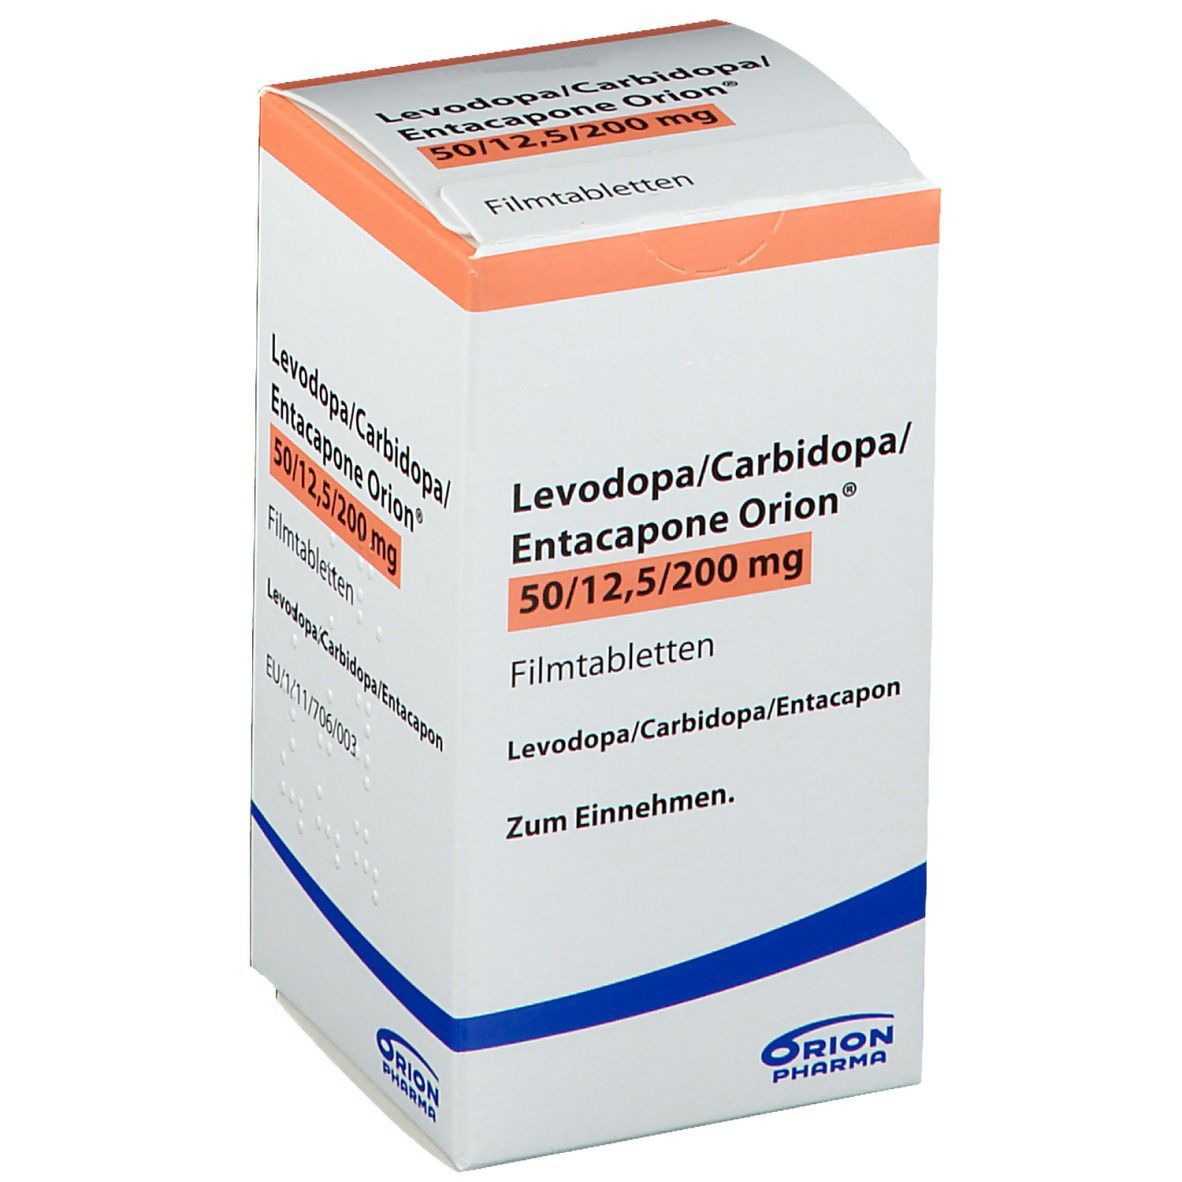 Levodopa/Carbidopa/Entacapone Orion 50 mg/12,5 mg/200 mg